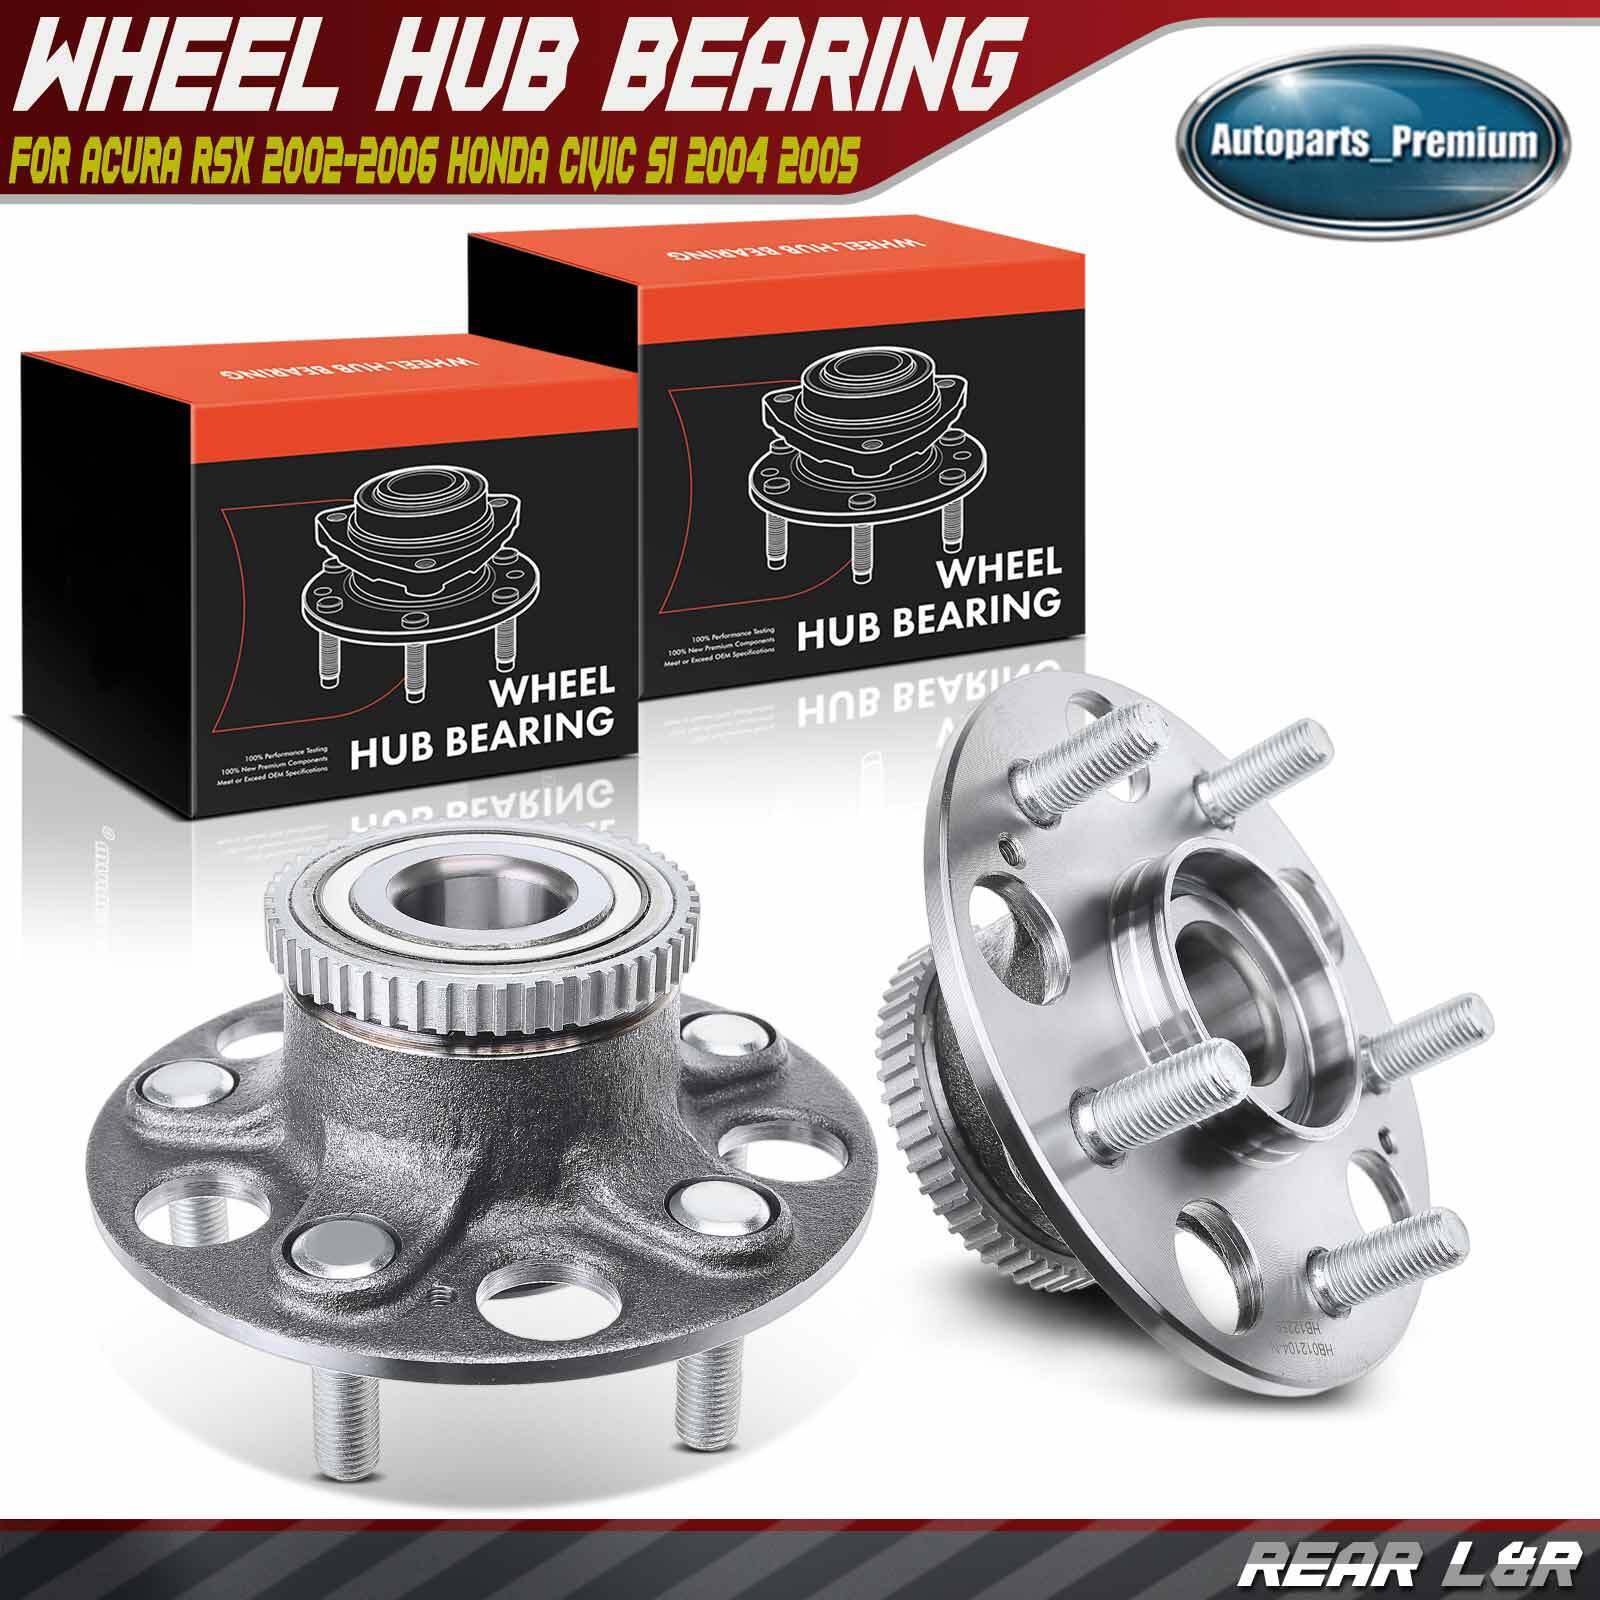 2x Rear Wheel Hub & Bearing Assembly for Acura RSX 02-06 Honda Civic Si 04-05